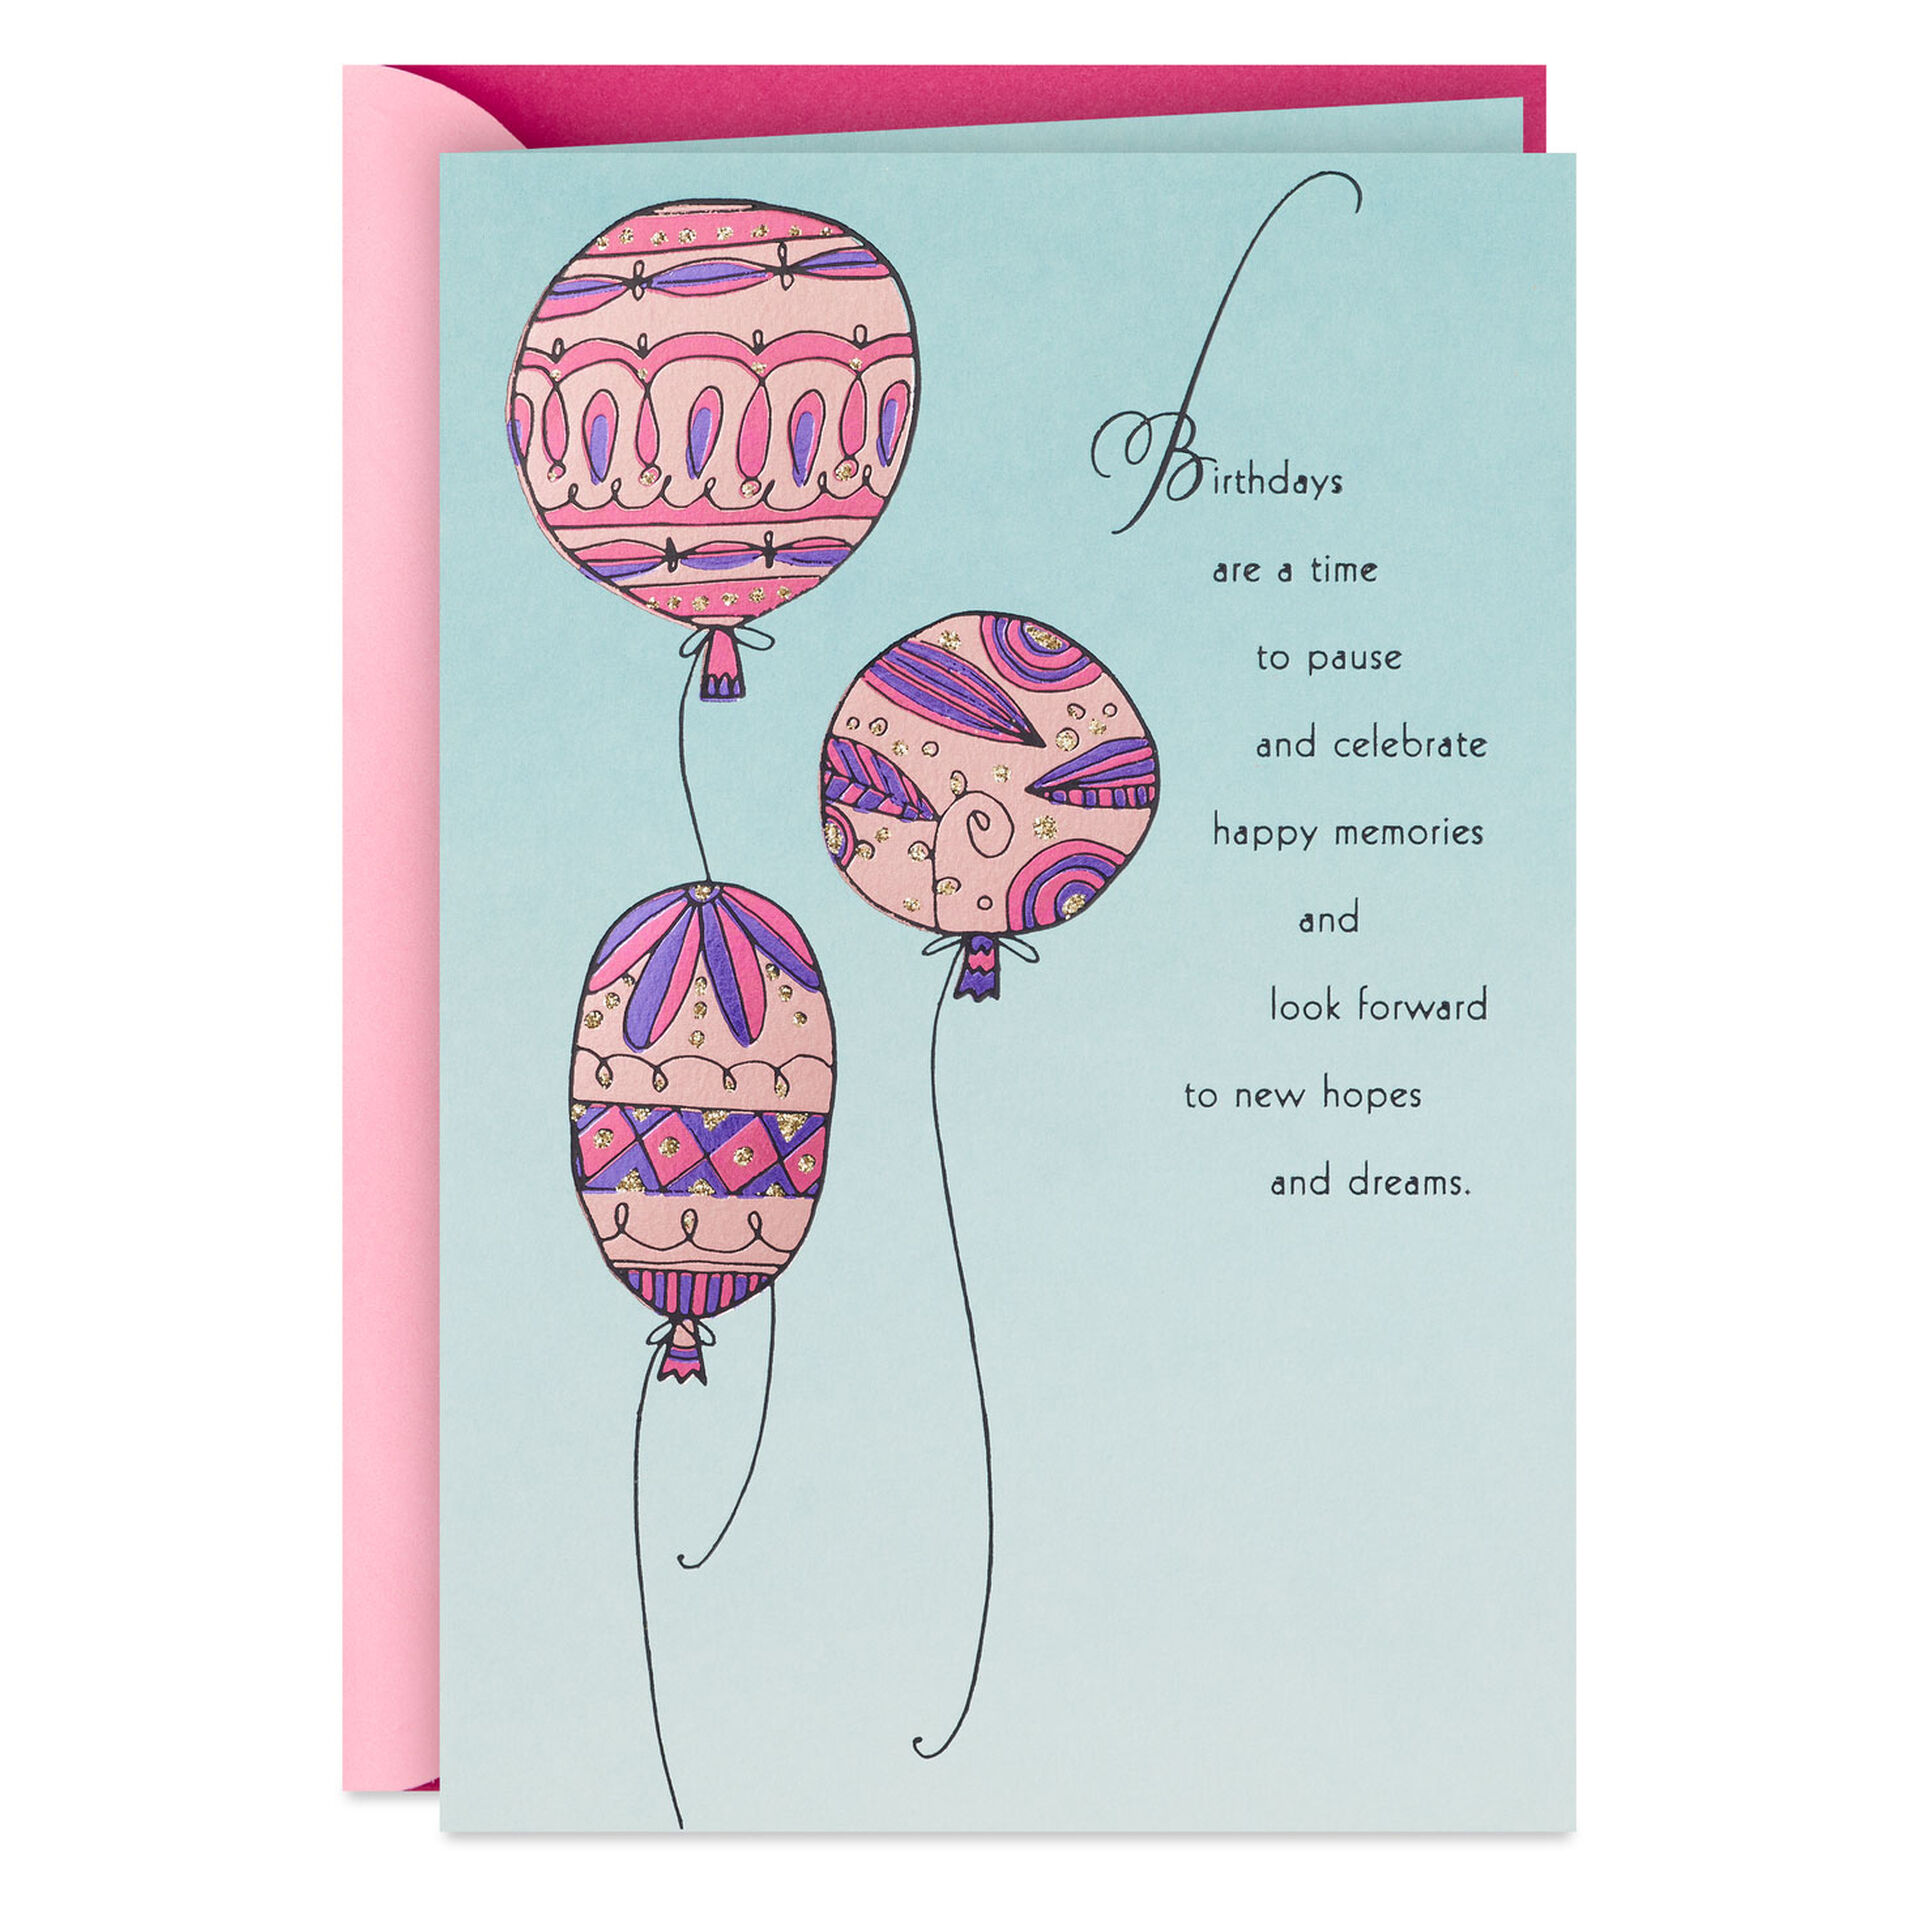 Balloons-New-Hopes-Dreams-Birthday-Card_529HBD3703_01